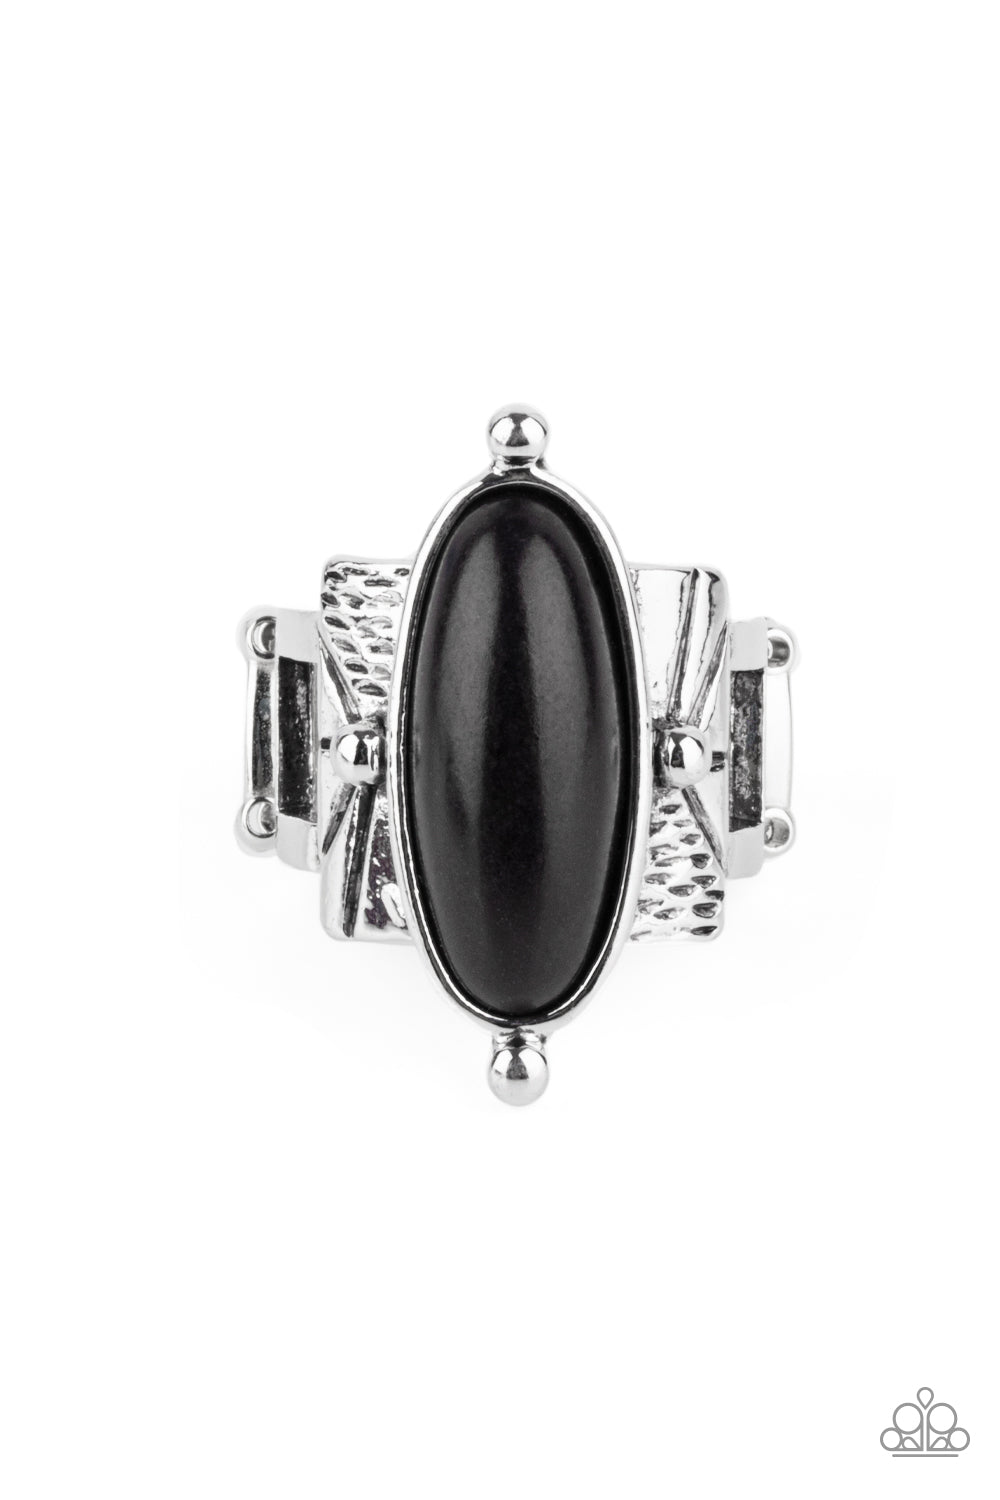 This BADLAND Is My BADLAND - Black ring 1694